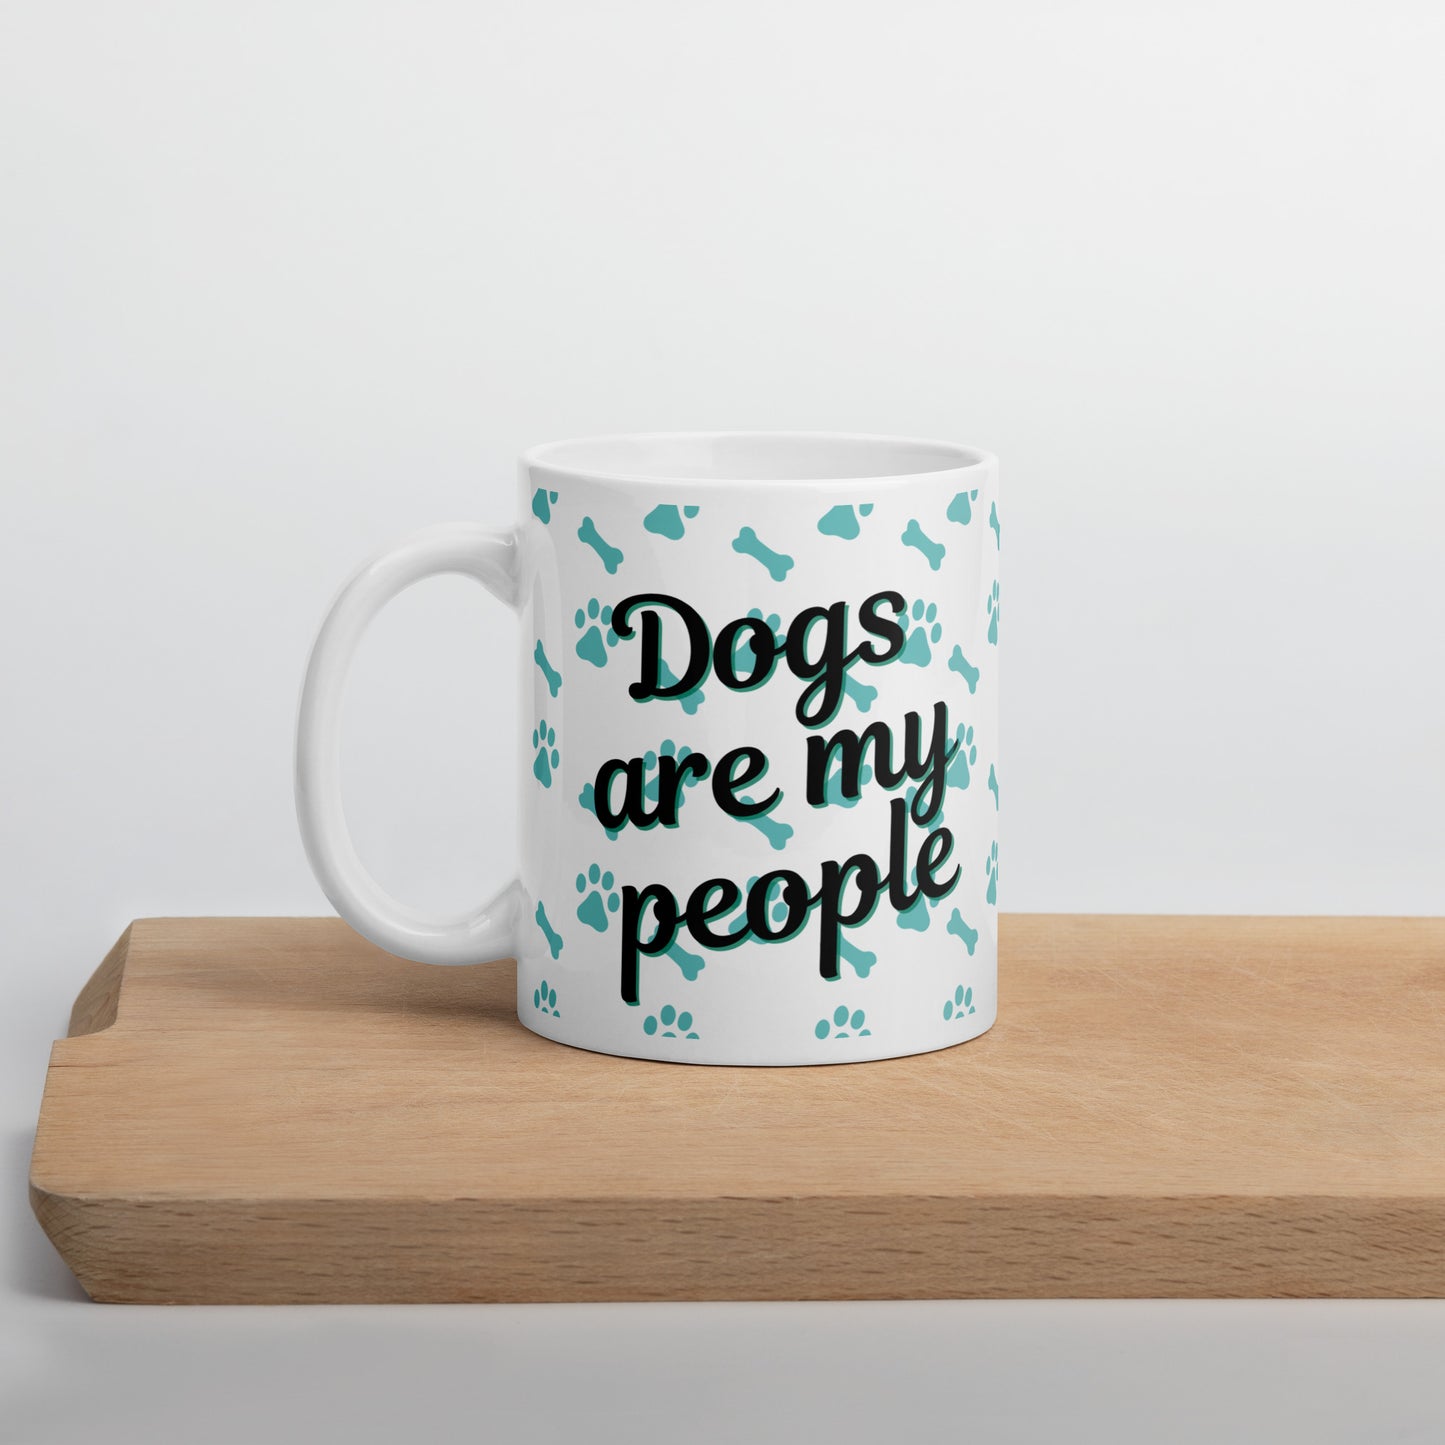 Dogs Are My People - Dog Lovers Mug